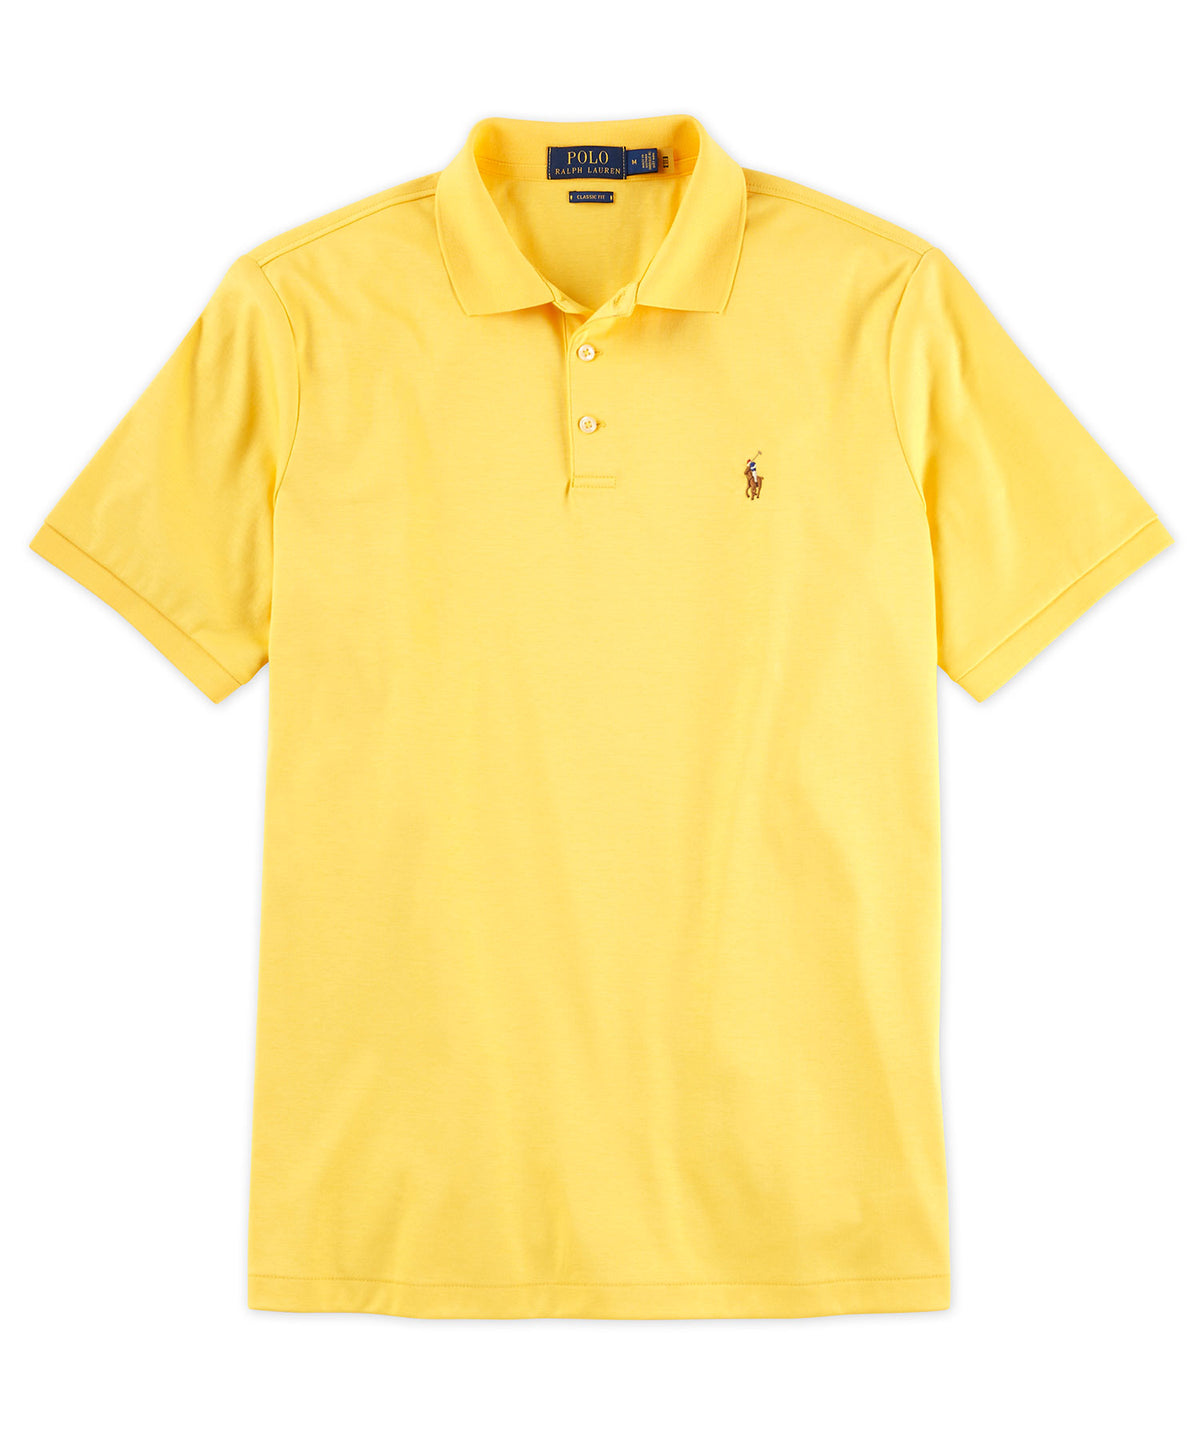 Polo Ralph Lauren Short Sleeve Classic Fit Soft Touch Pima Cotton Polo Shirt